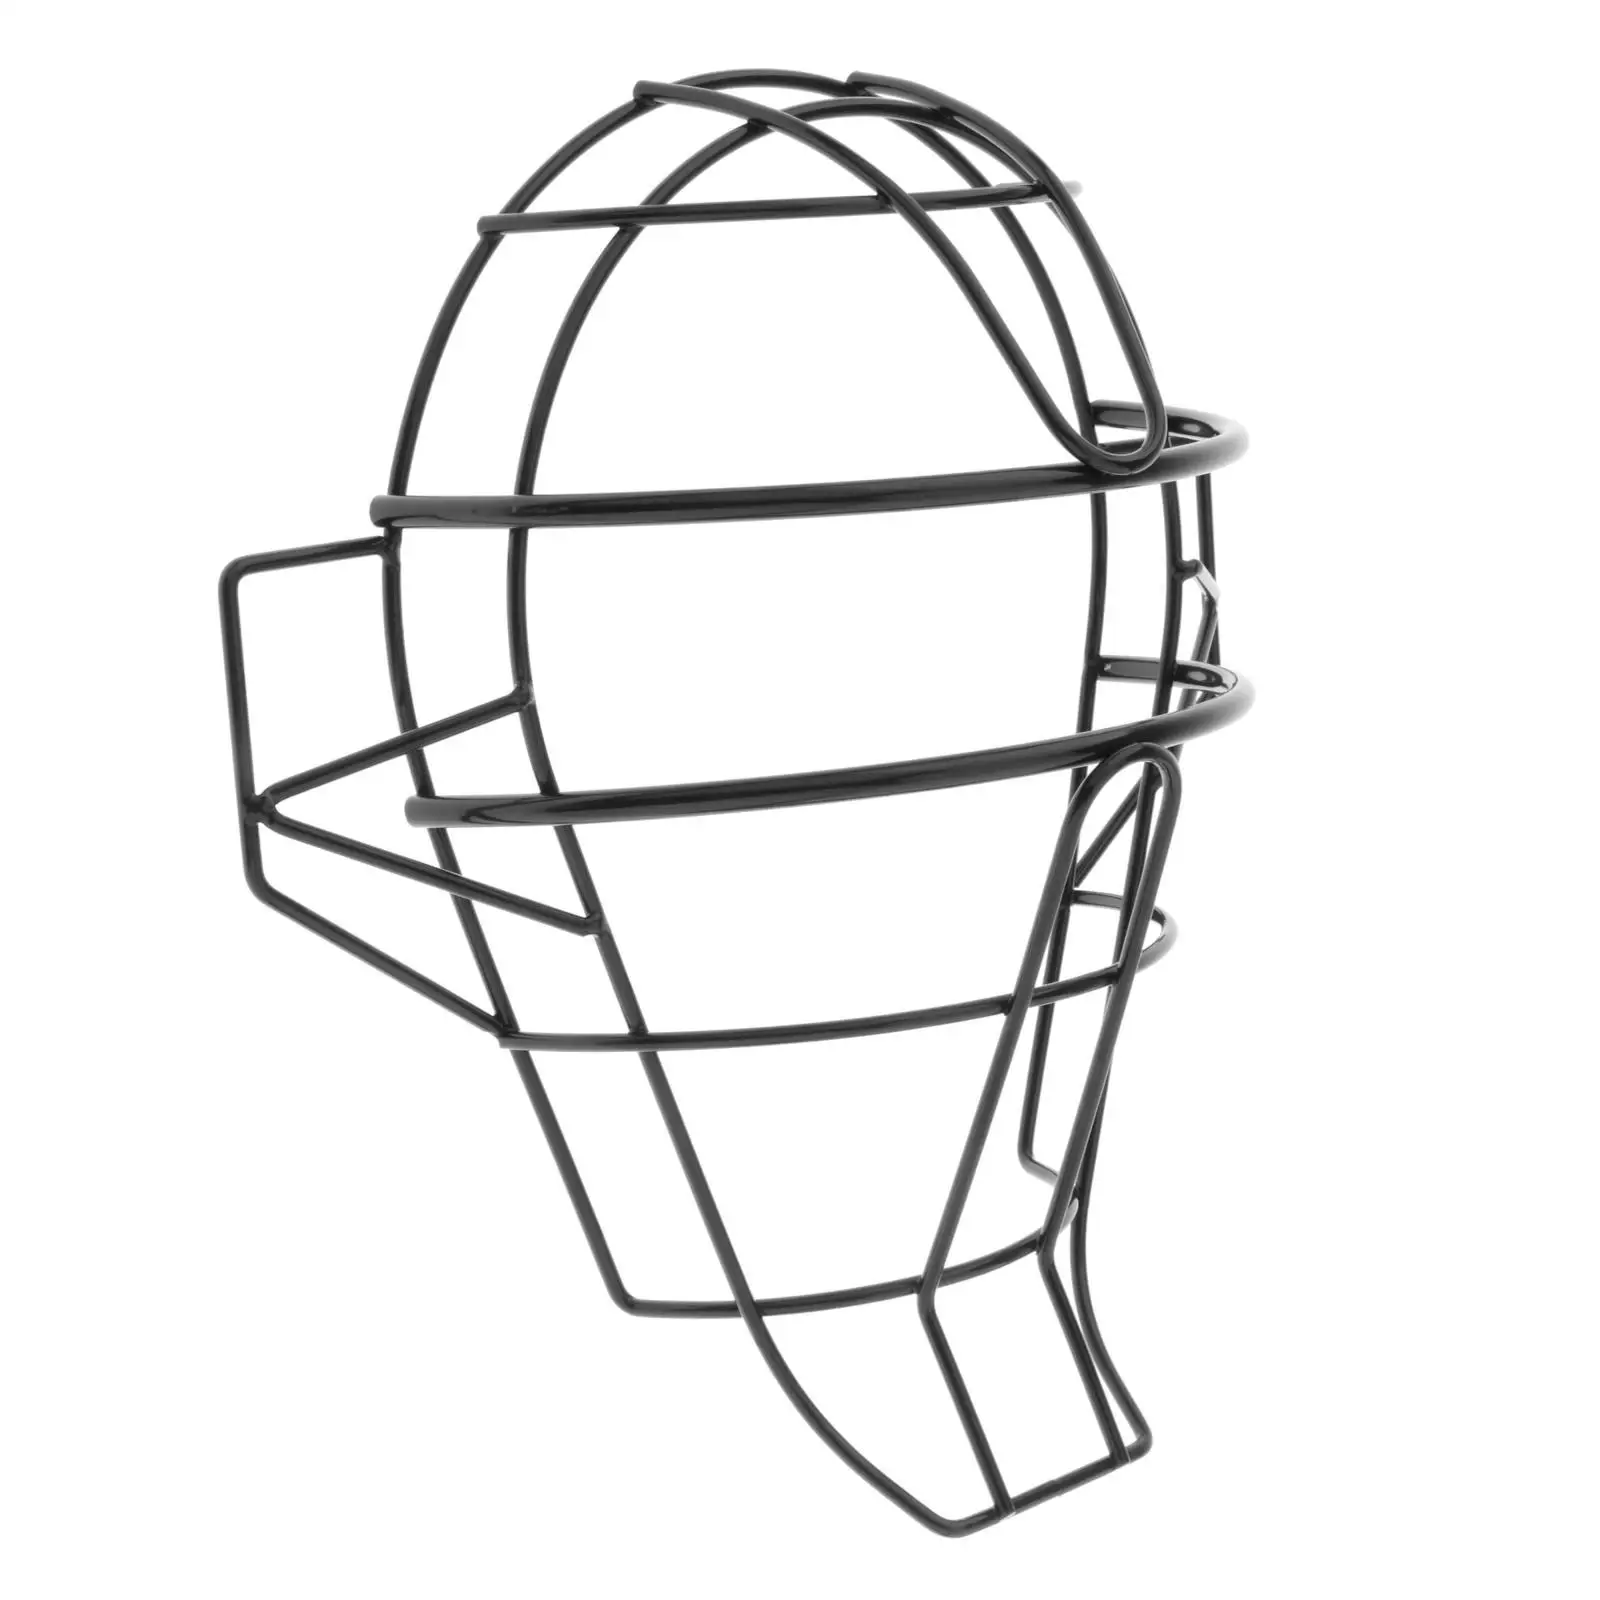 Batting Face Guard Baseball Softball Protective Accessories Wide